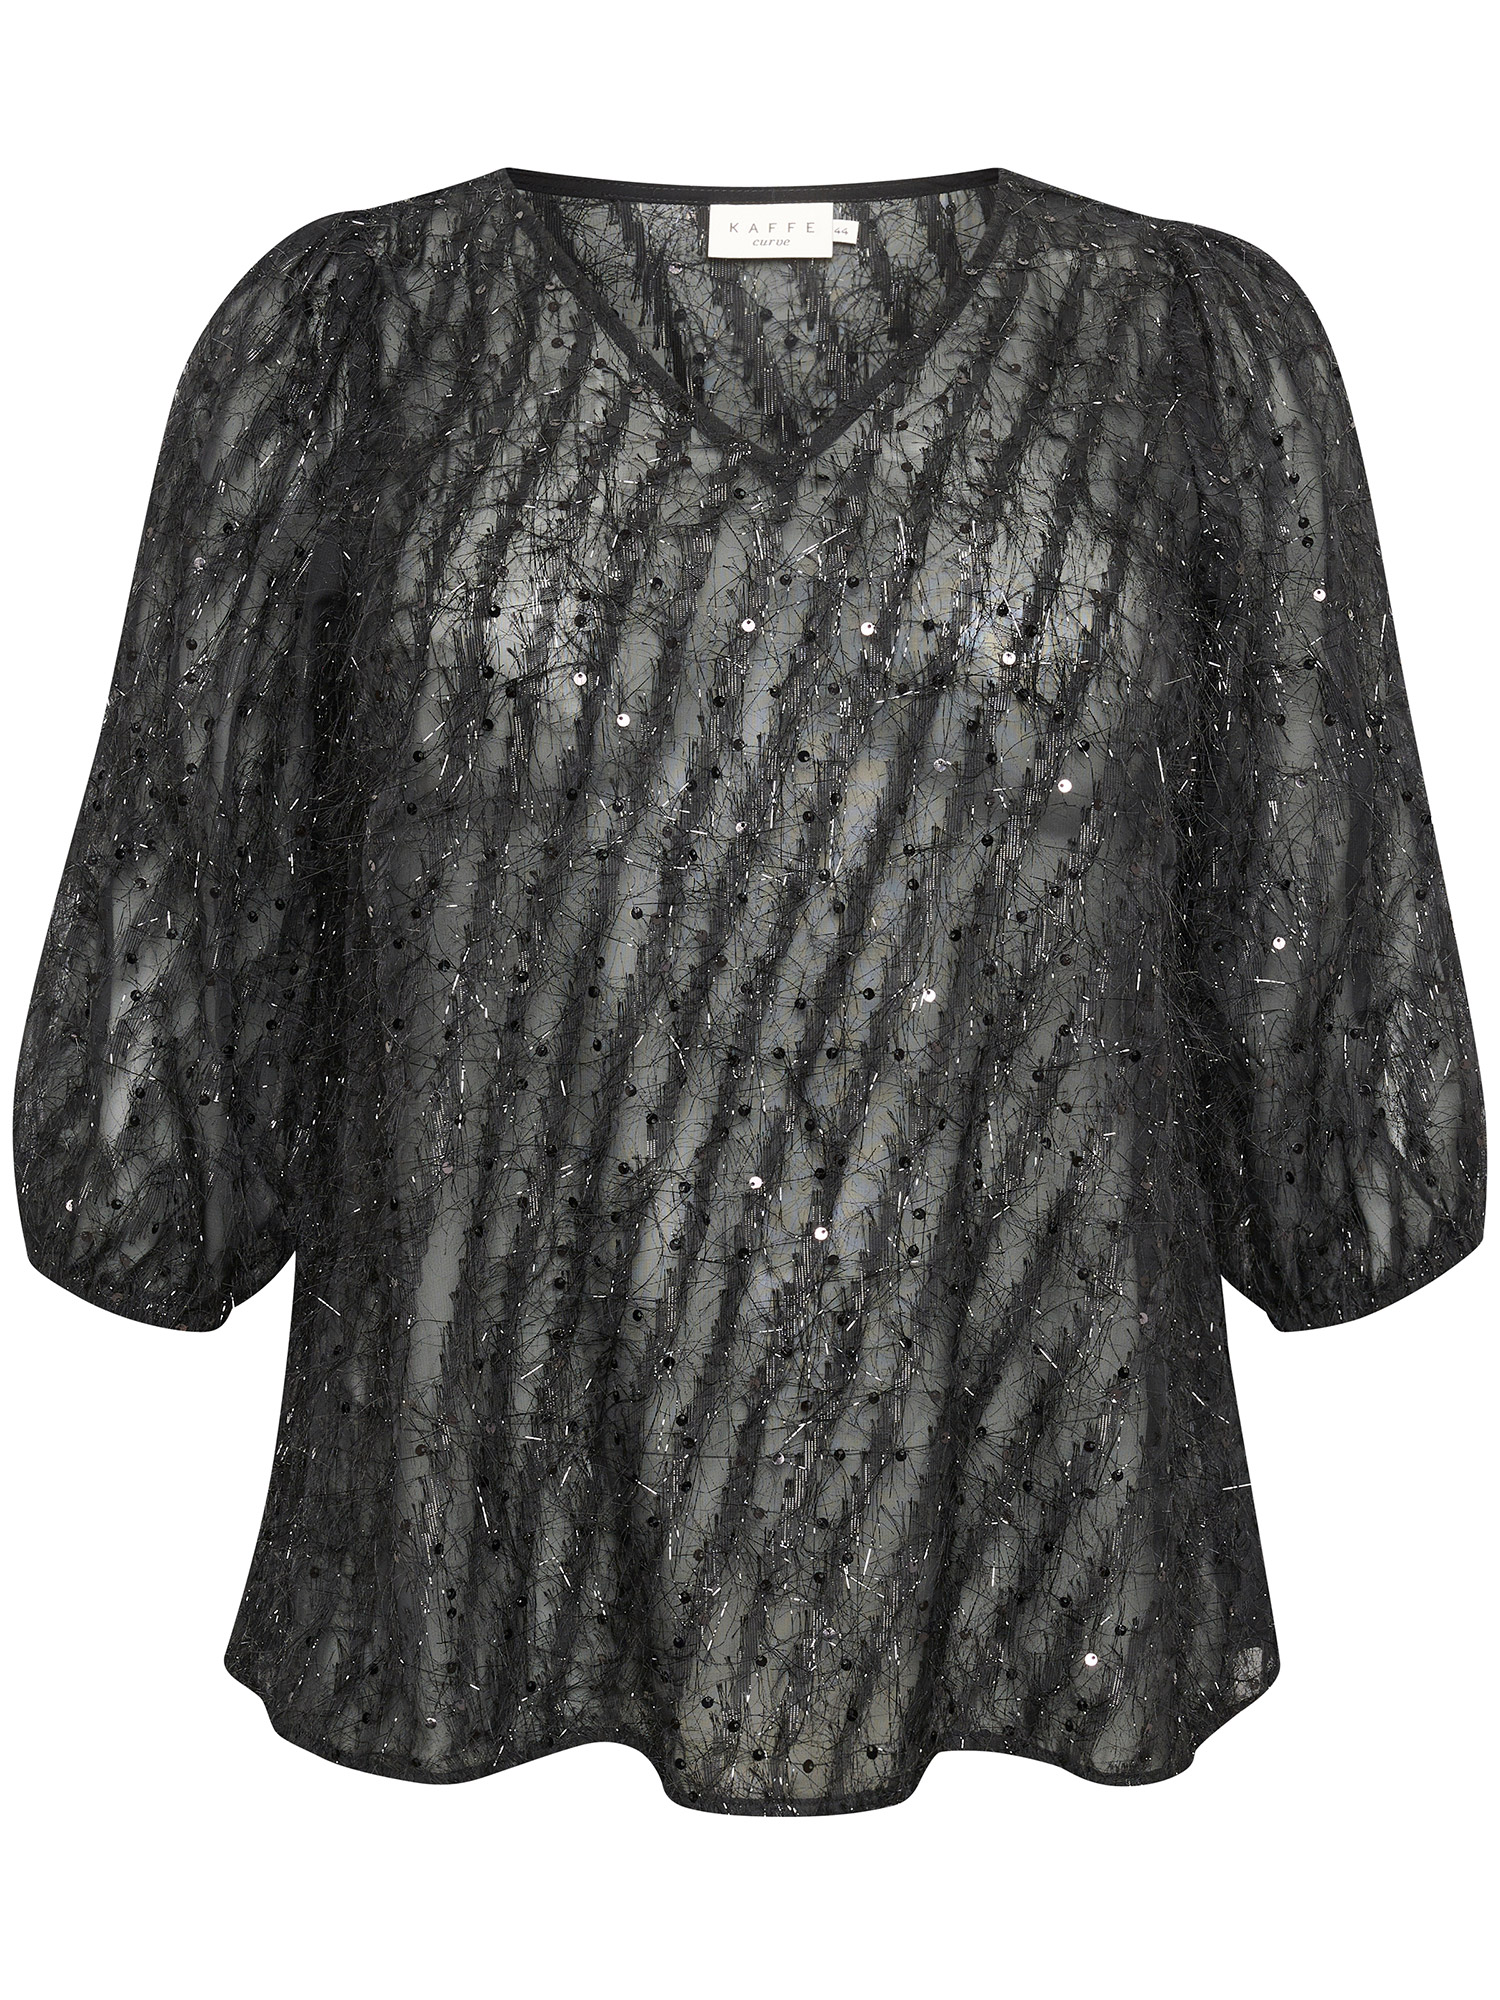 KC LASINDA - svart chiffon bluse med palietter og glitter fra Kaffe Curve